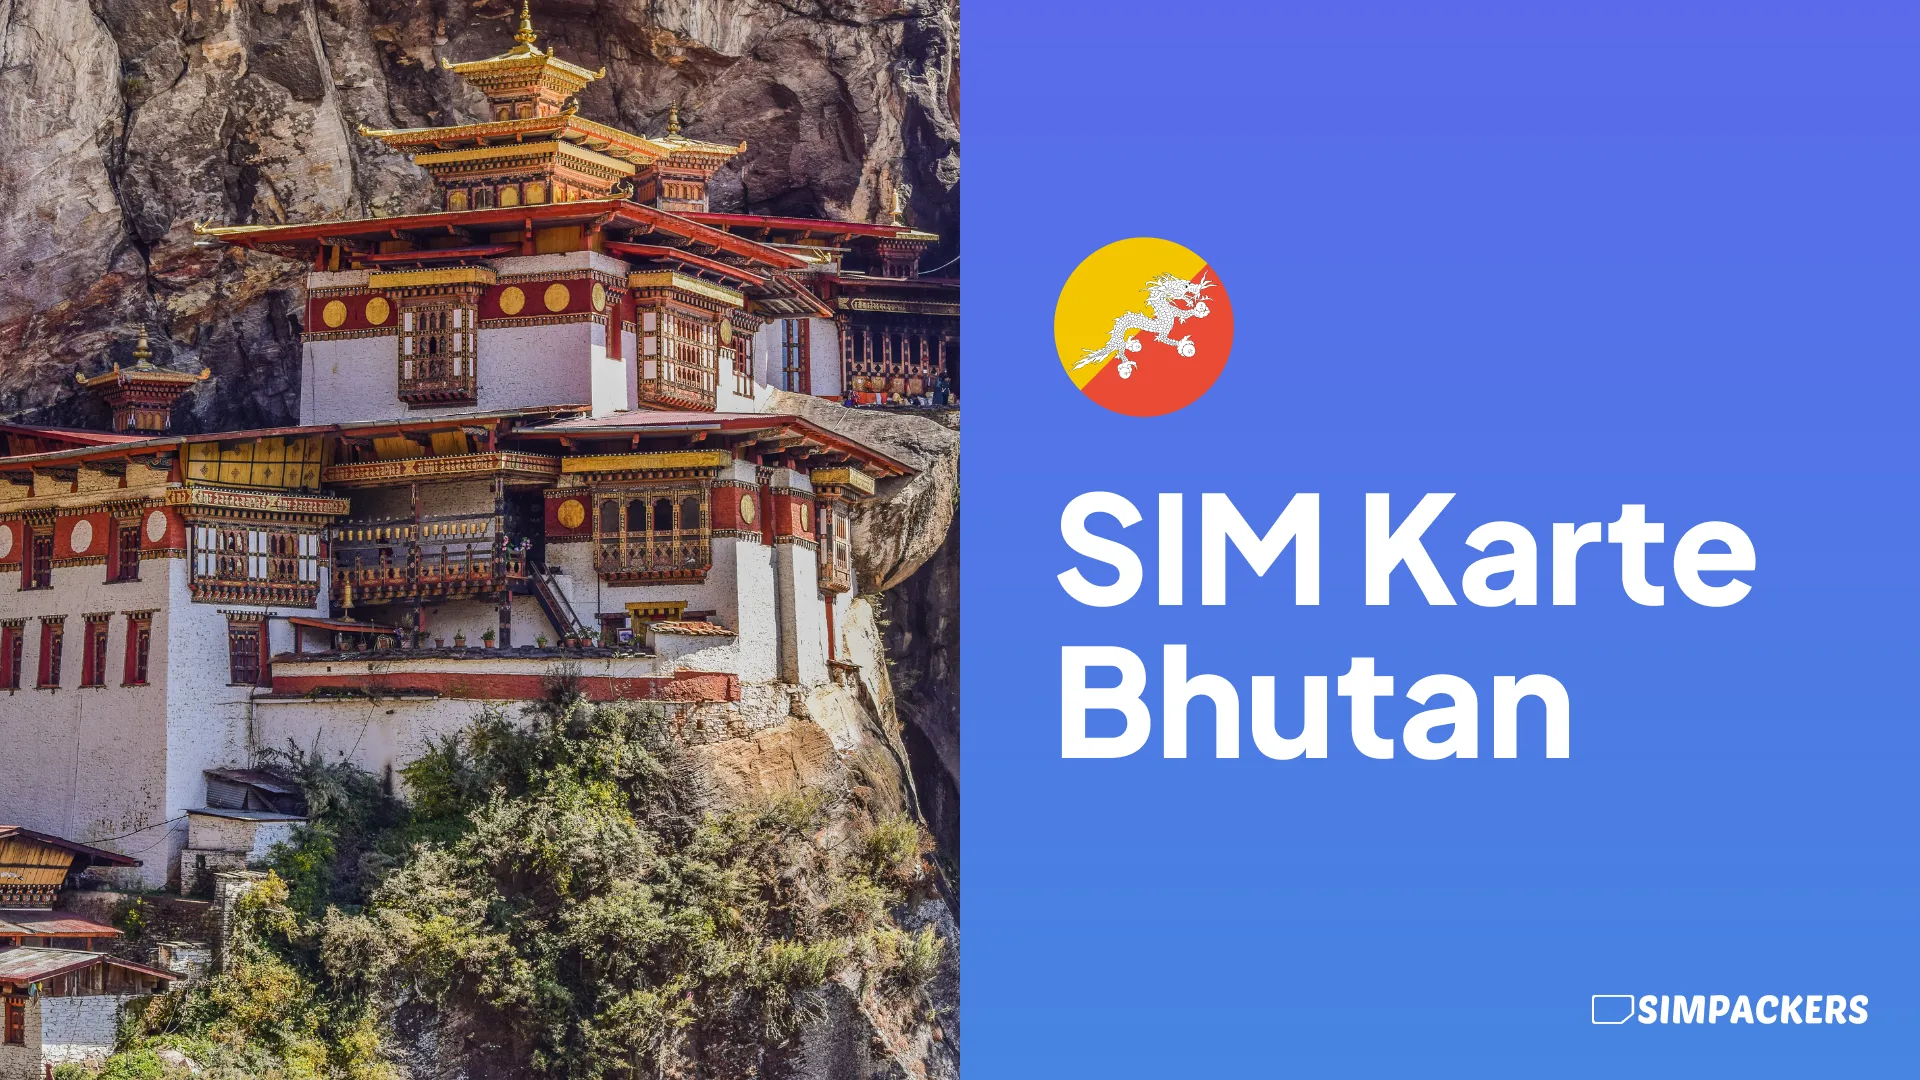 DE/FEATURED_IMAGES/sim-karte-bhutan.webp